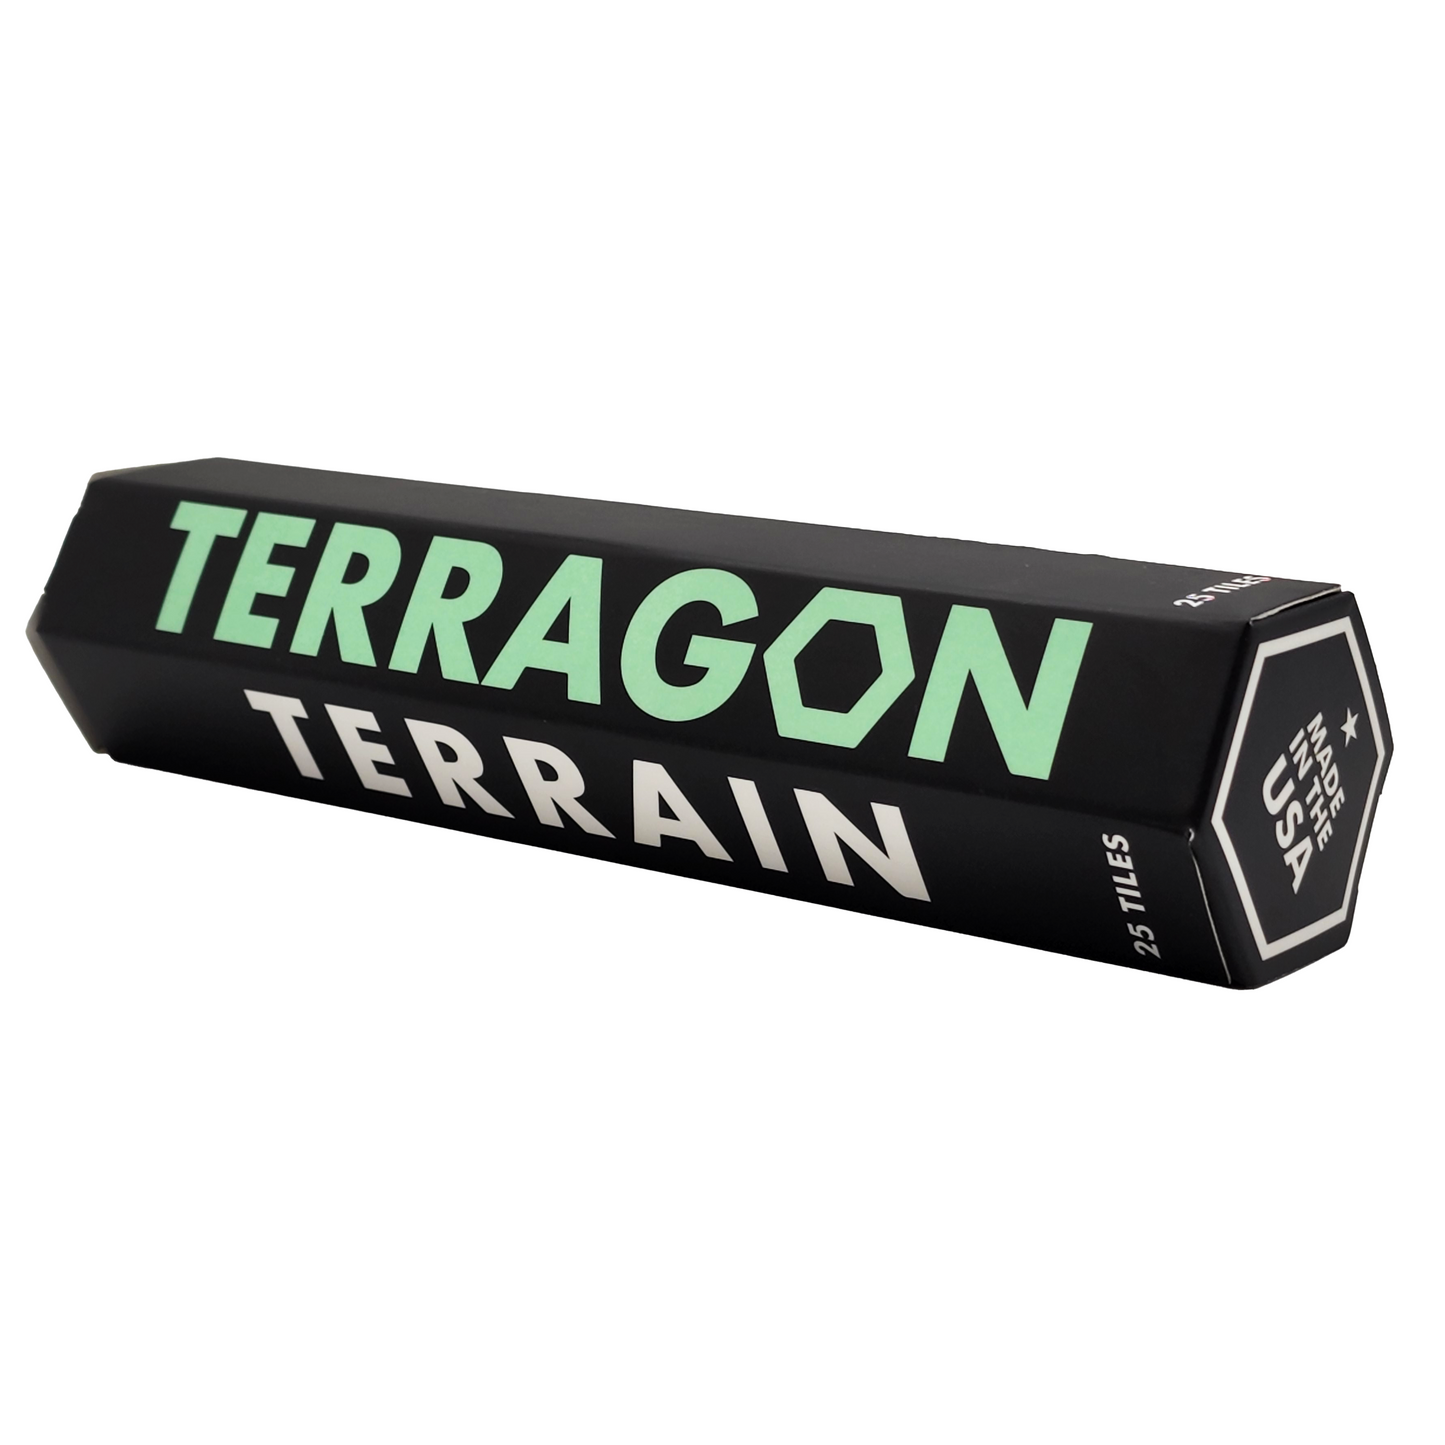 Terragon Terrain | 25 Pack